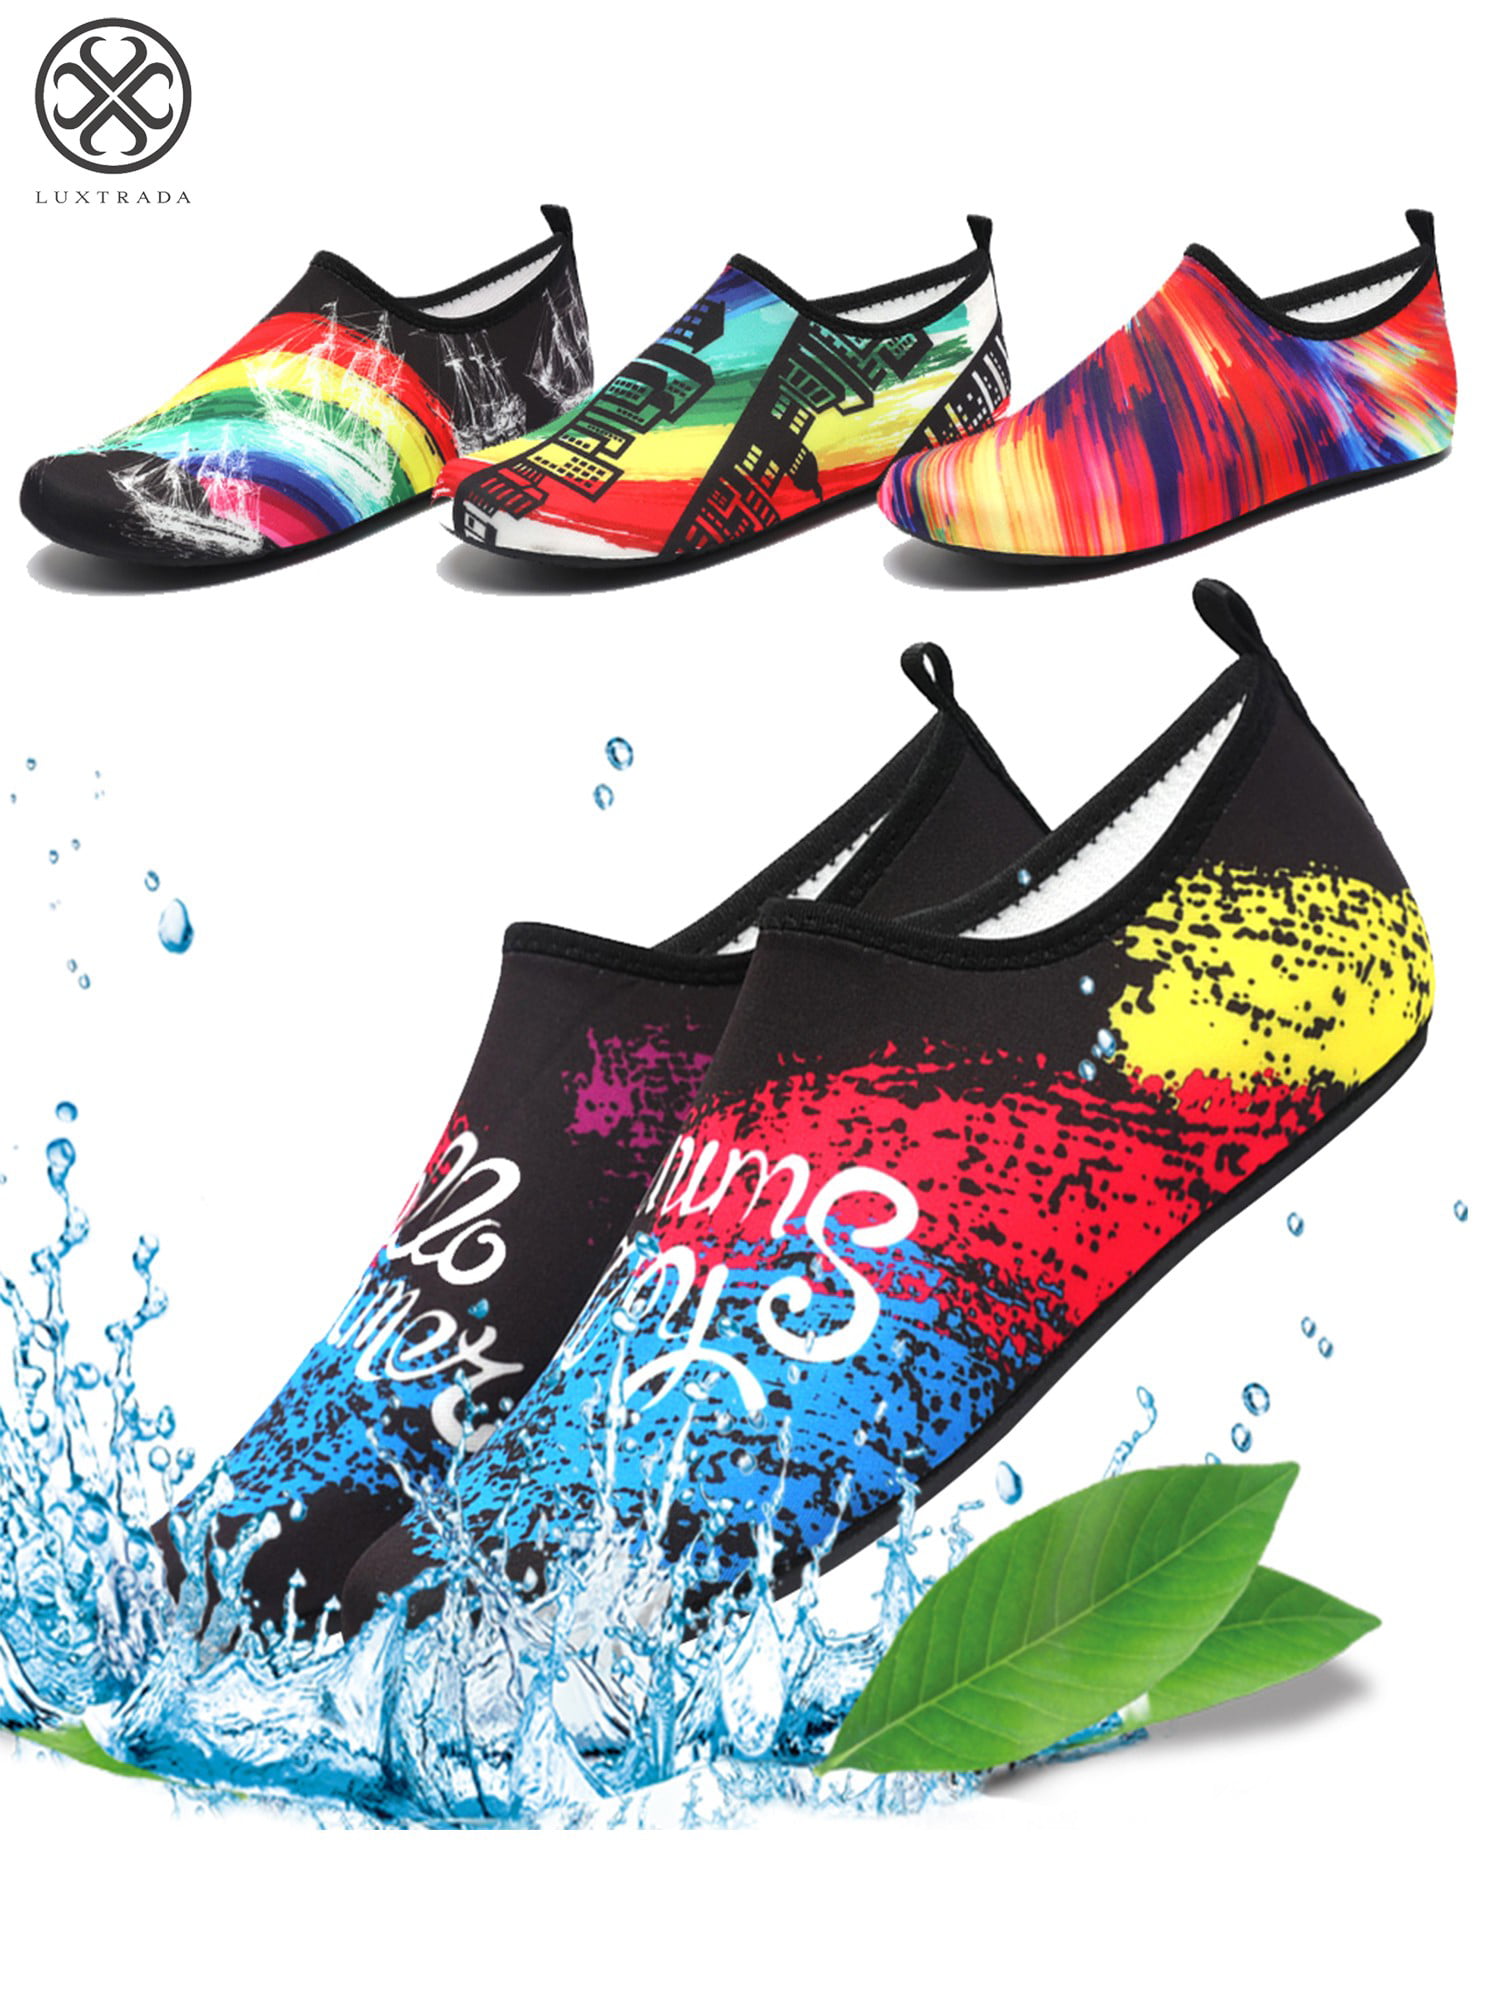 Barefoot Aqua Socks Men Women Water Skin Shoes Beach Swim Surf Diving Pool Size 